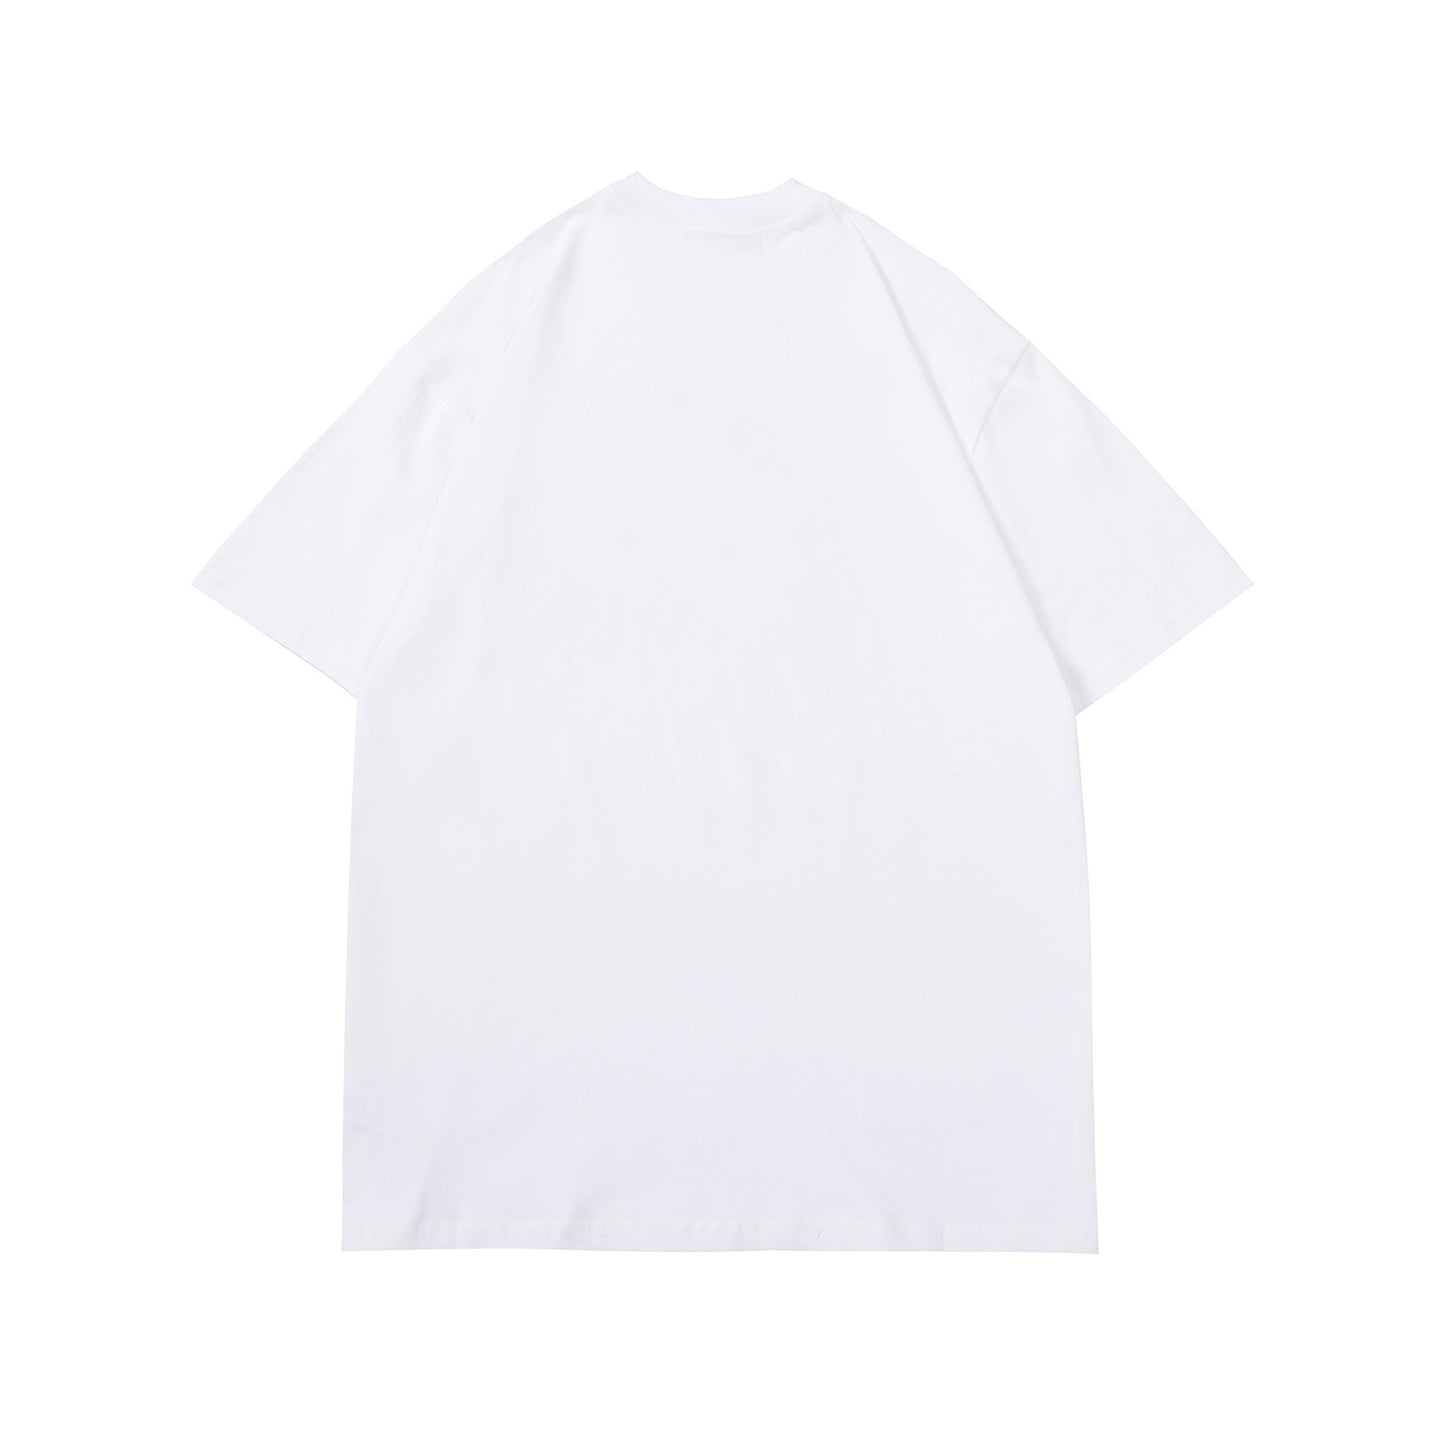 DREW Astronaut Print Unisex T-Shirt